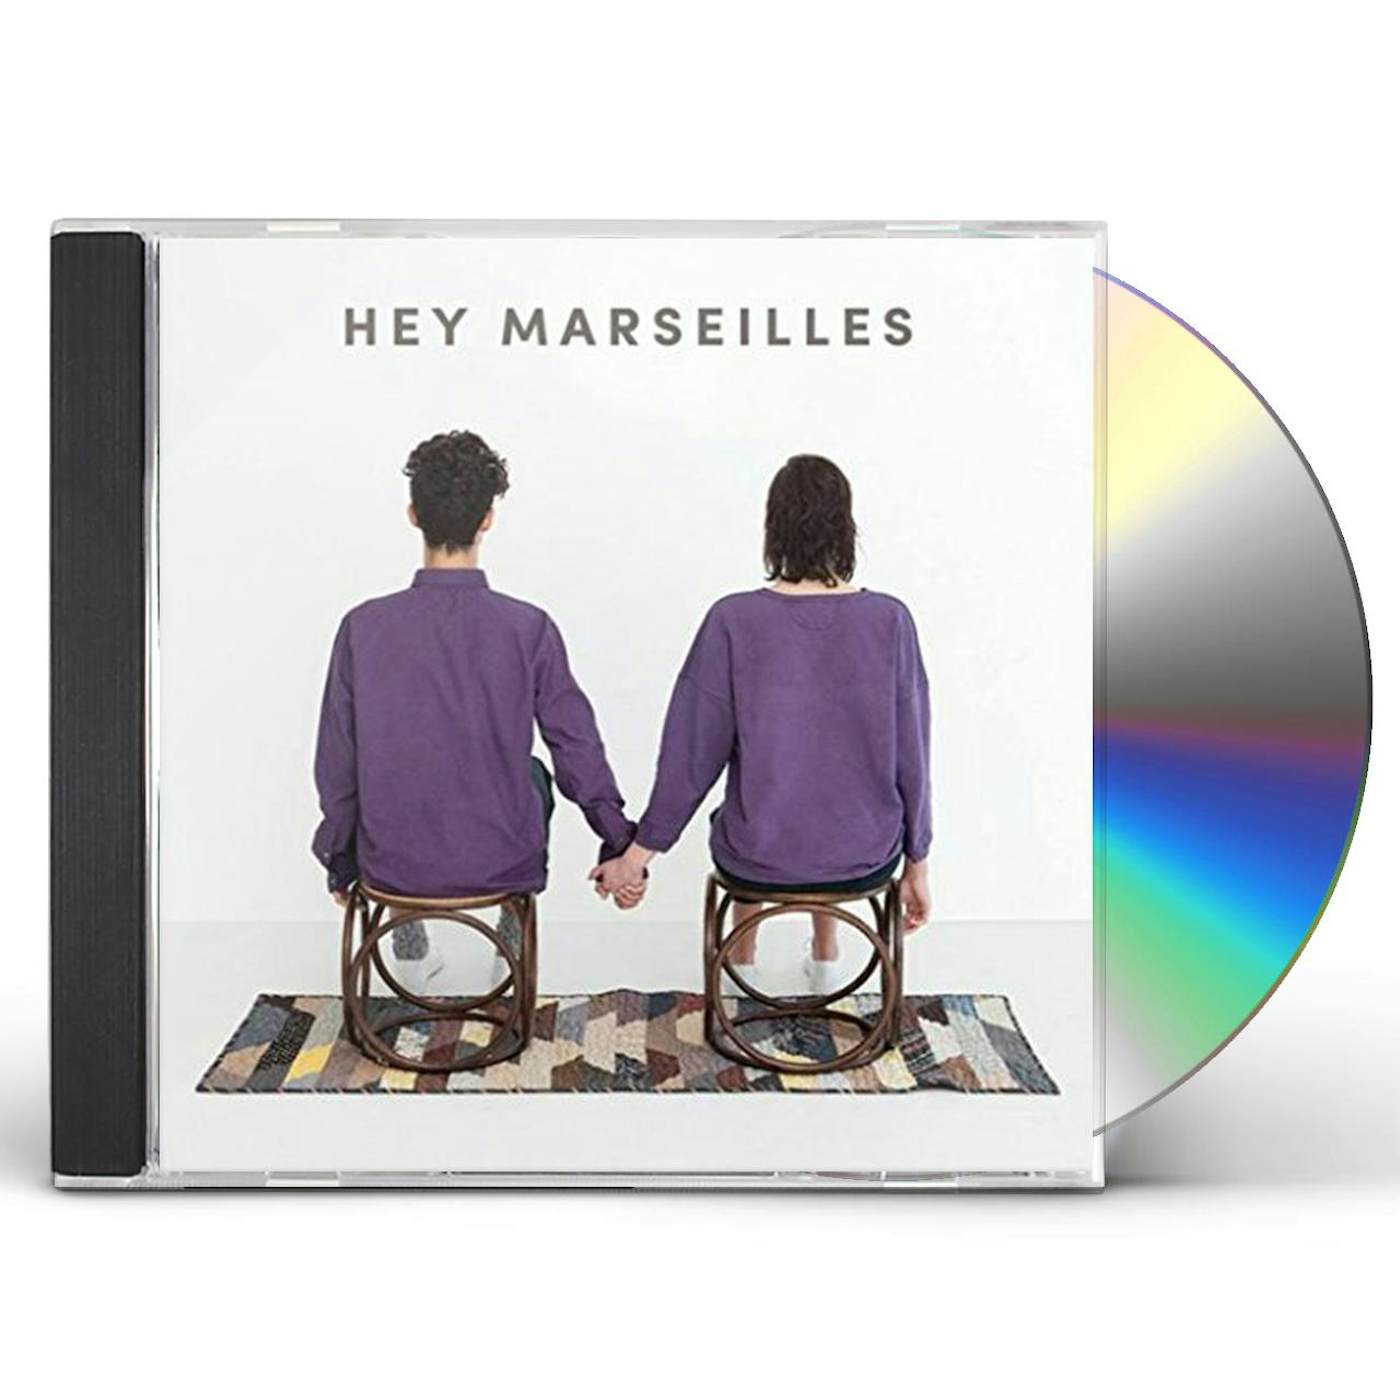 HEY MARSEILLES CD